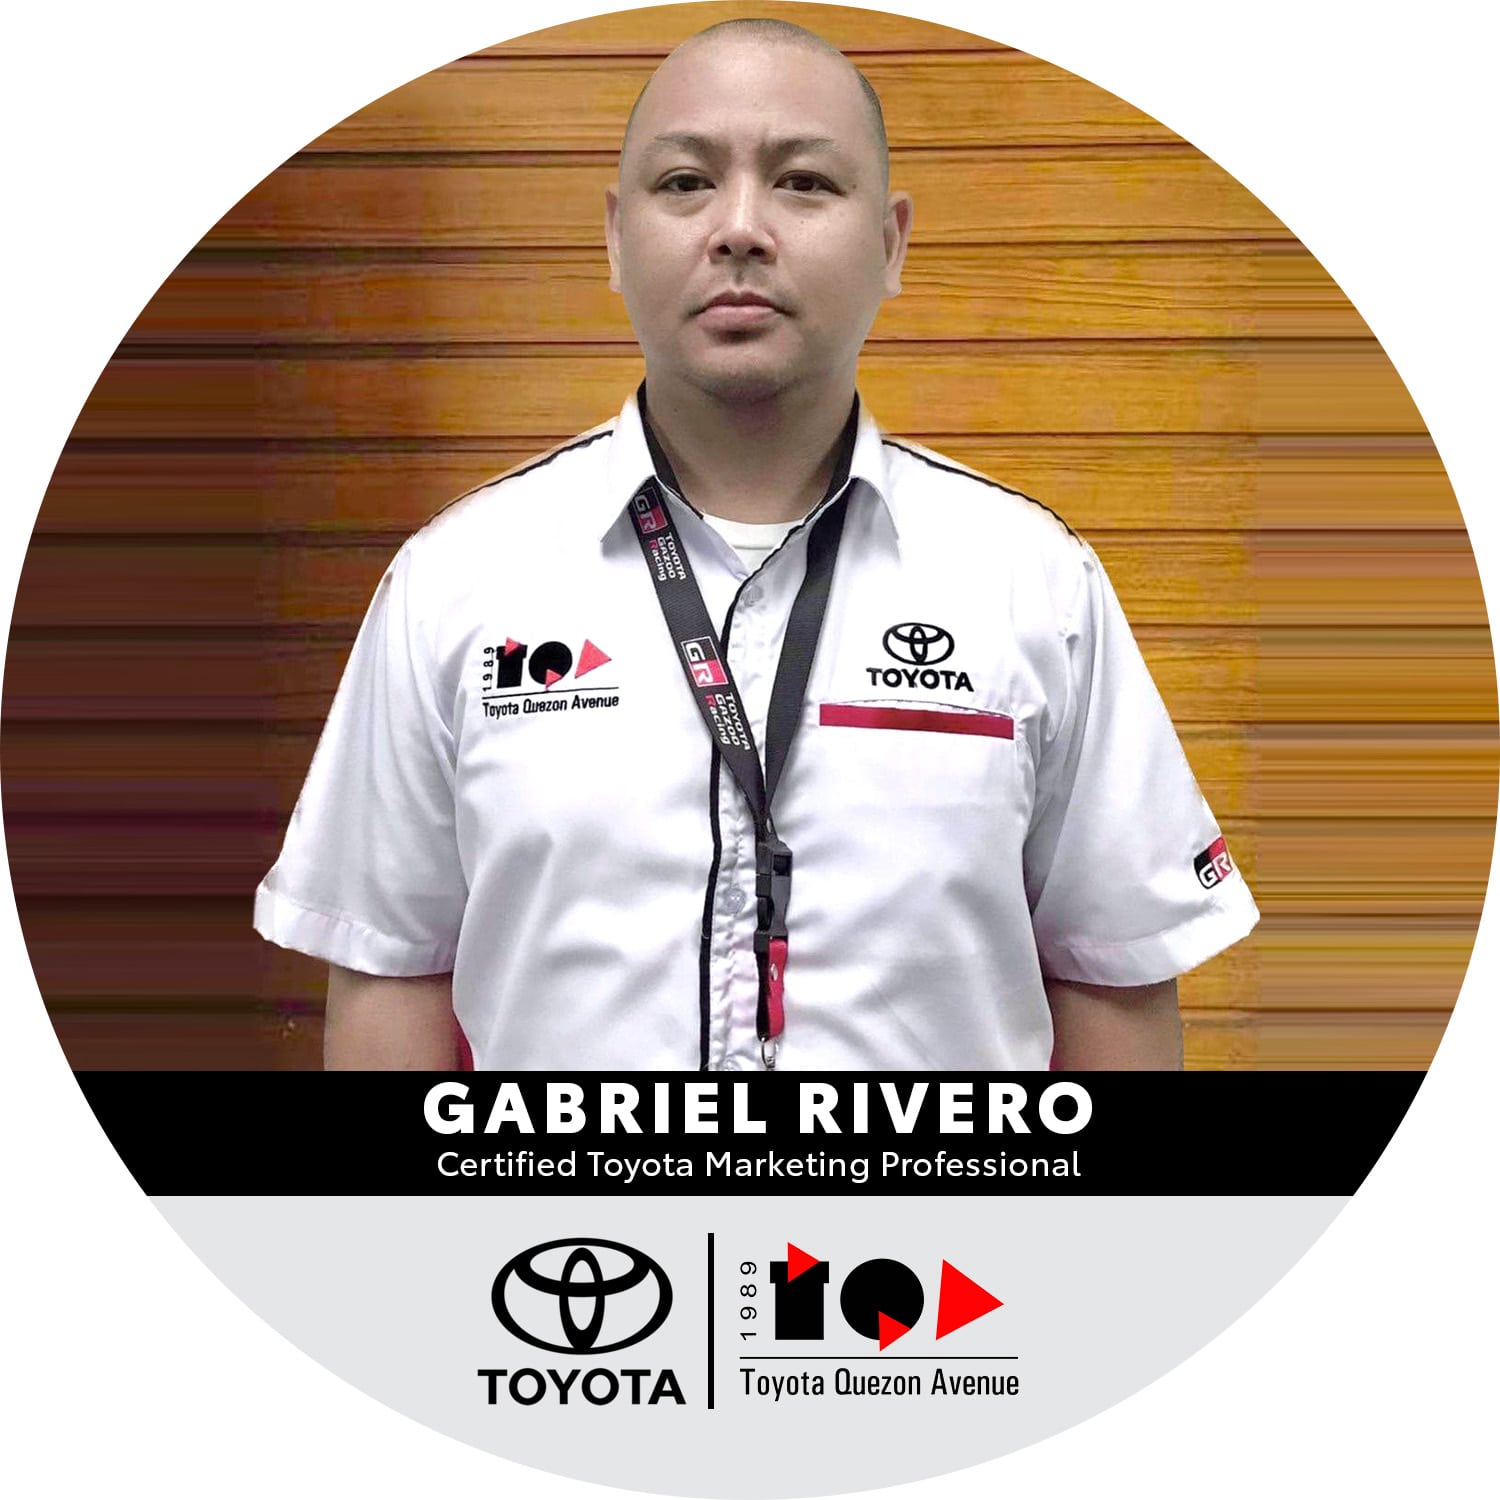 Certified Toyota Marketing Professionals - Grabiel Rivero